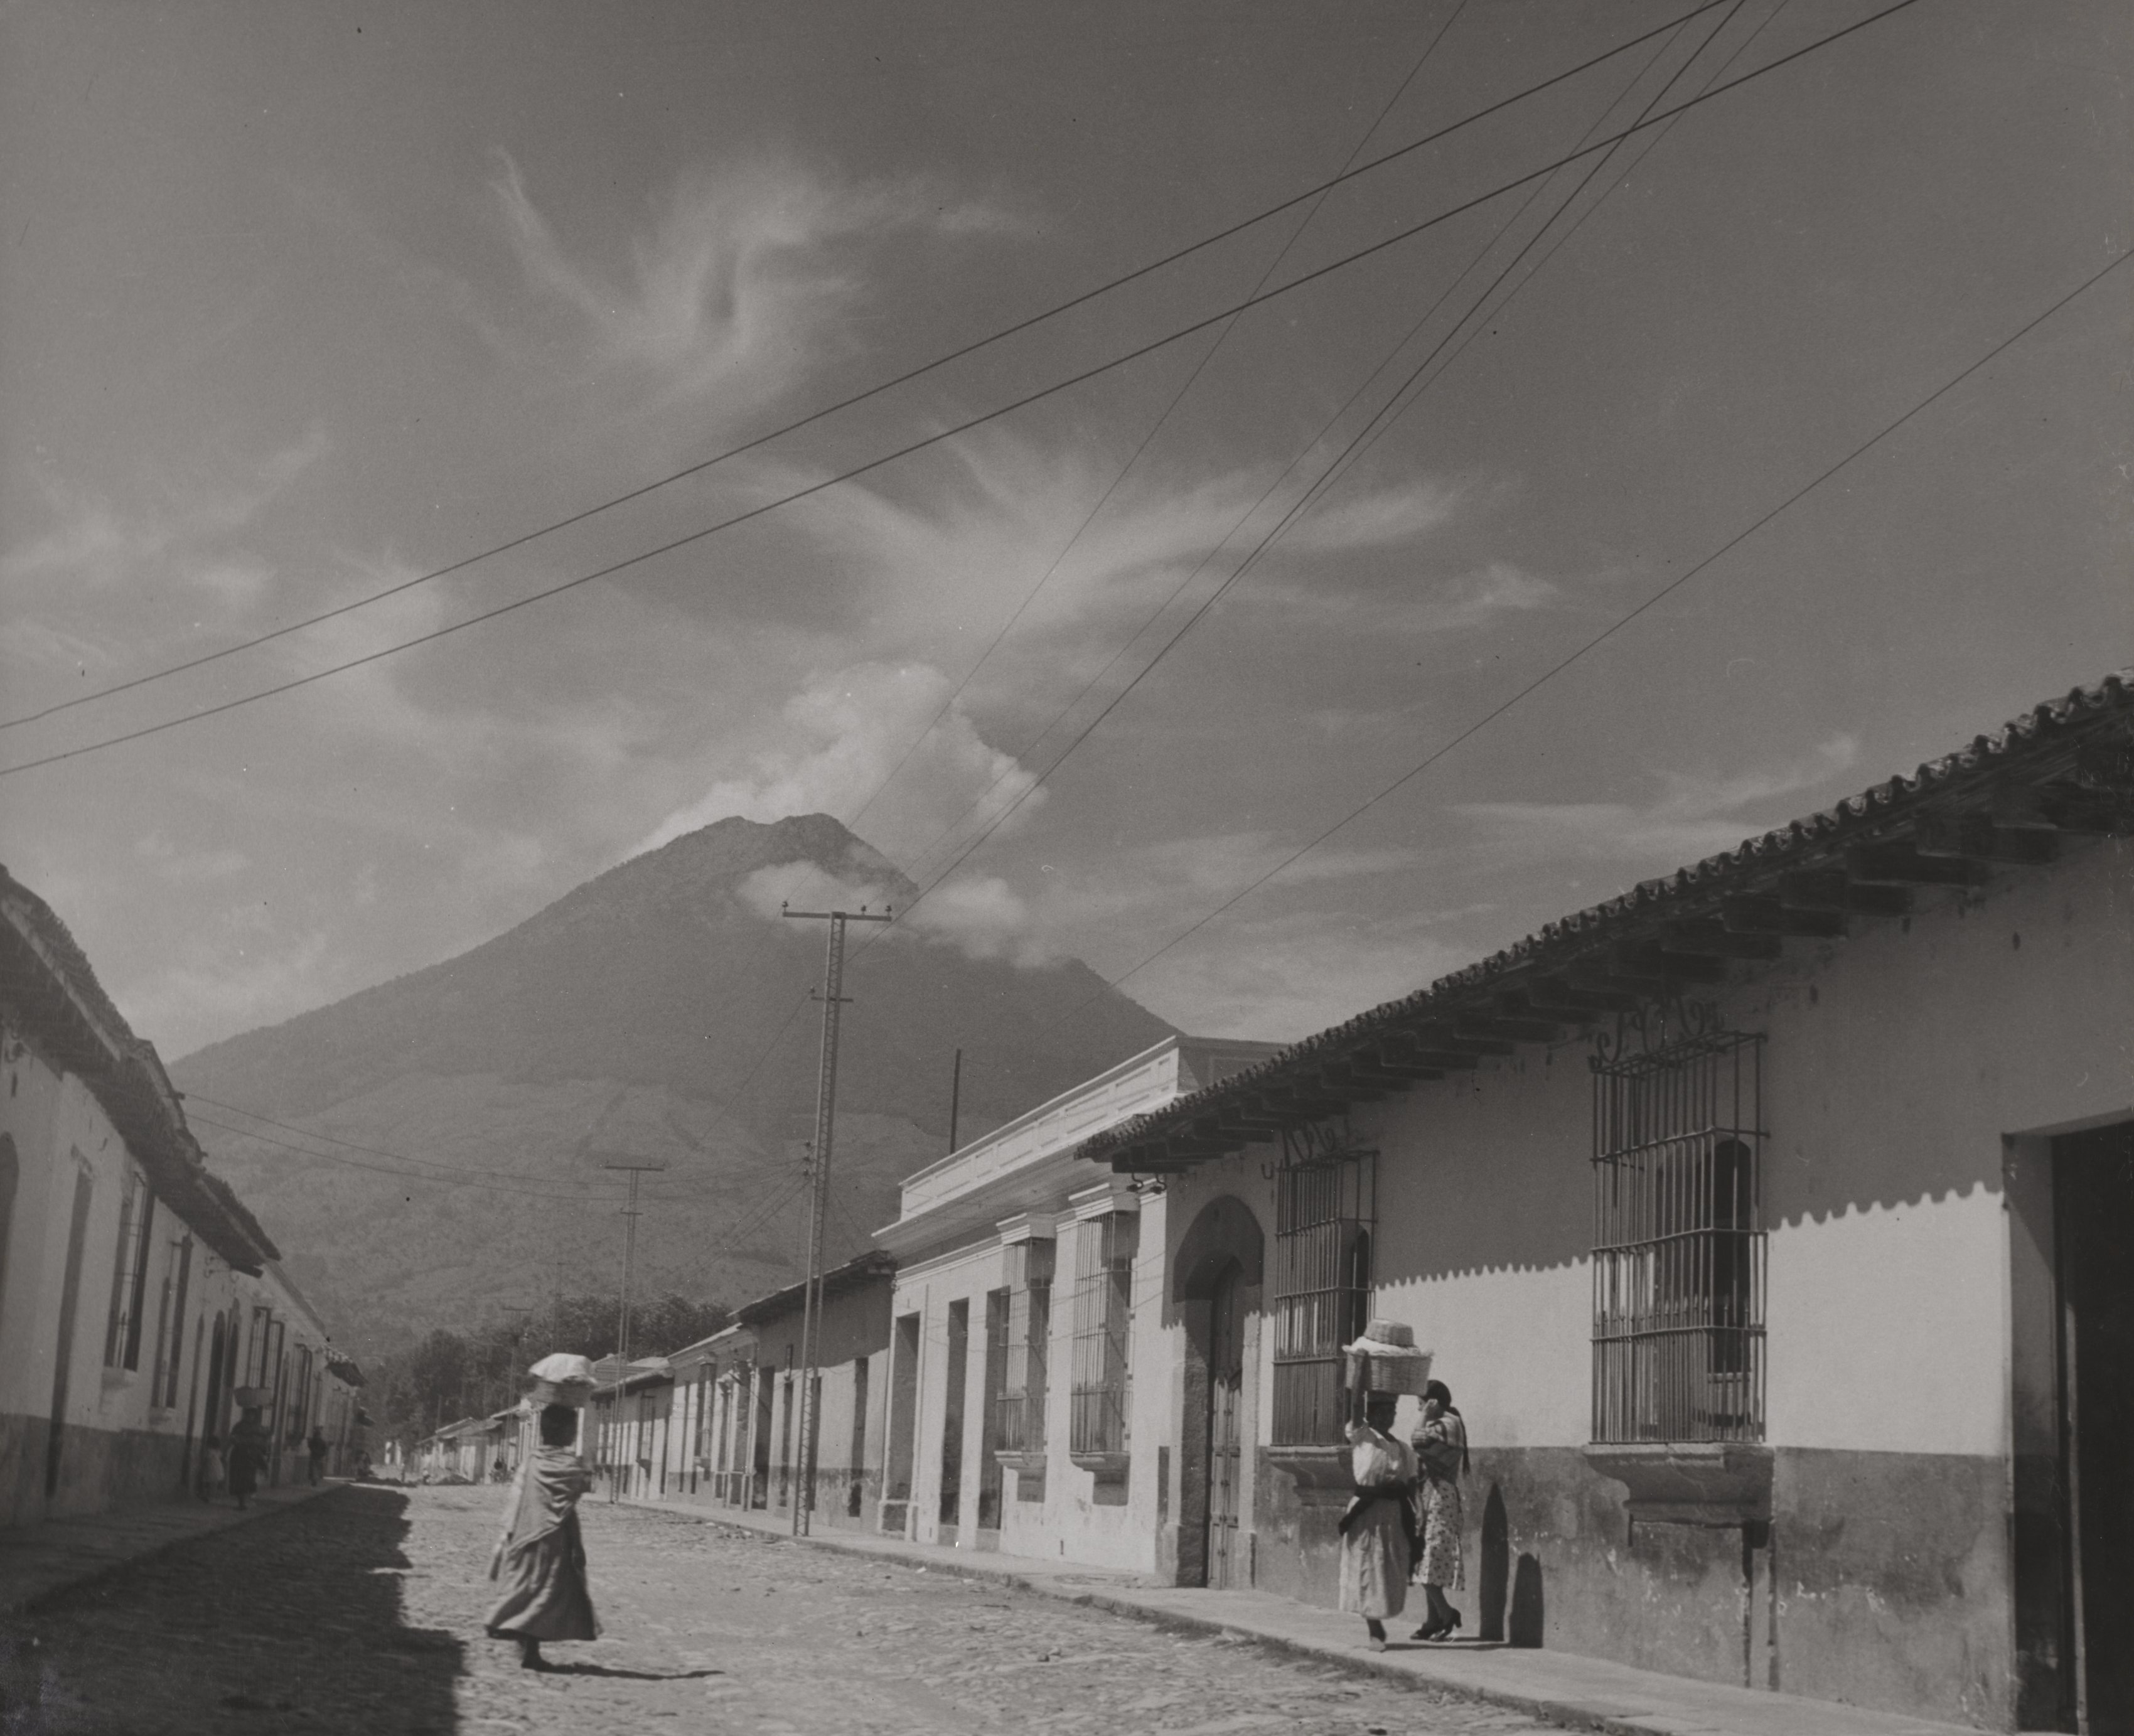 Antigua, Guatemala 